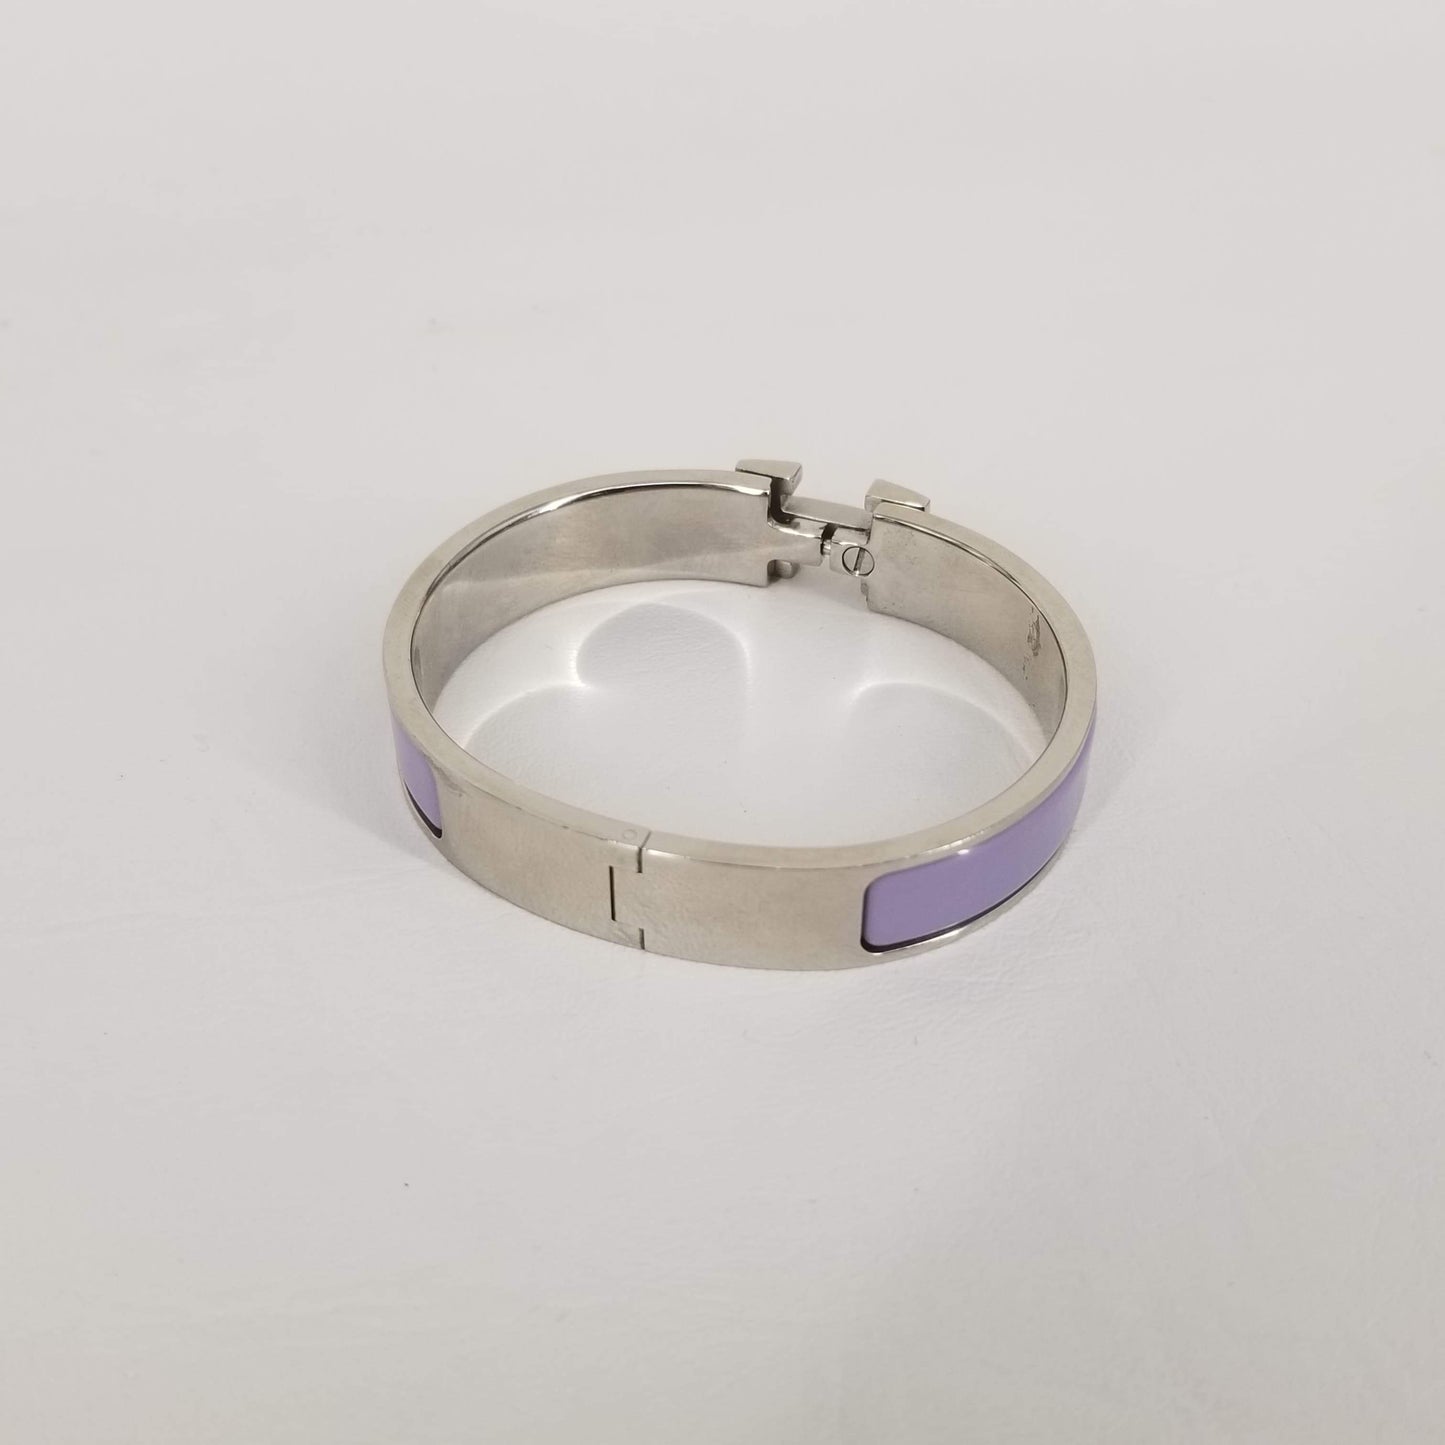 Authentic Hermes Lavender Enamel Clic Bracelet With Silver HW